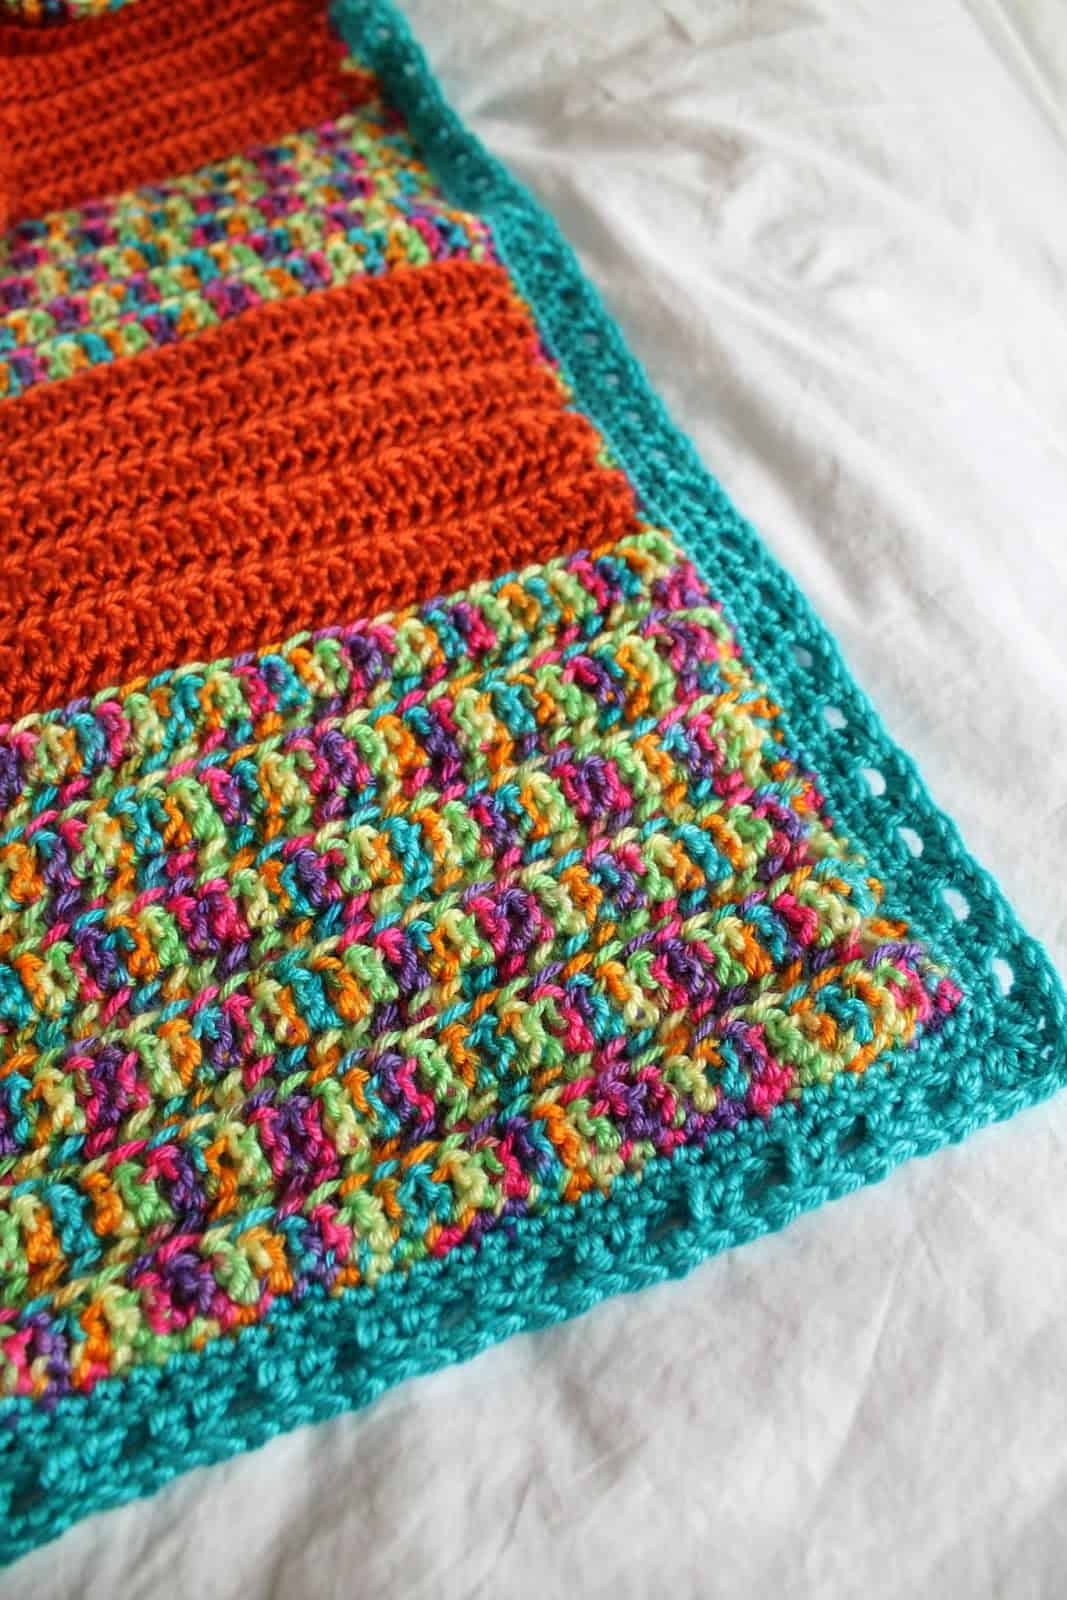 Crochet baby blanket on white background